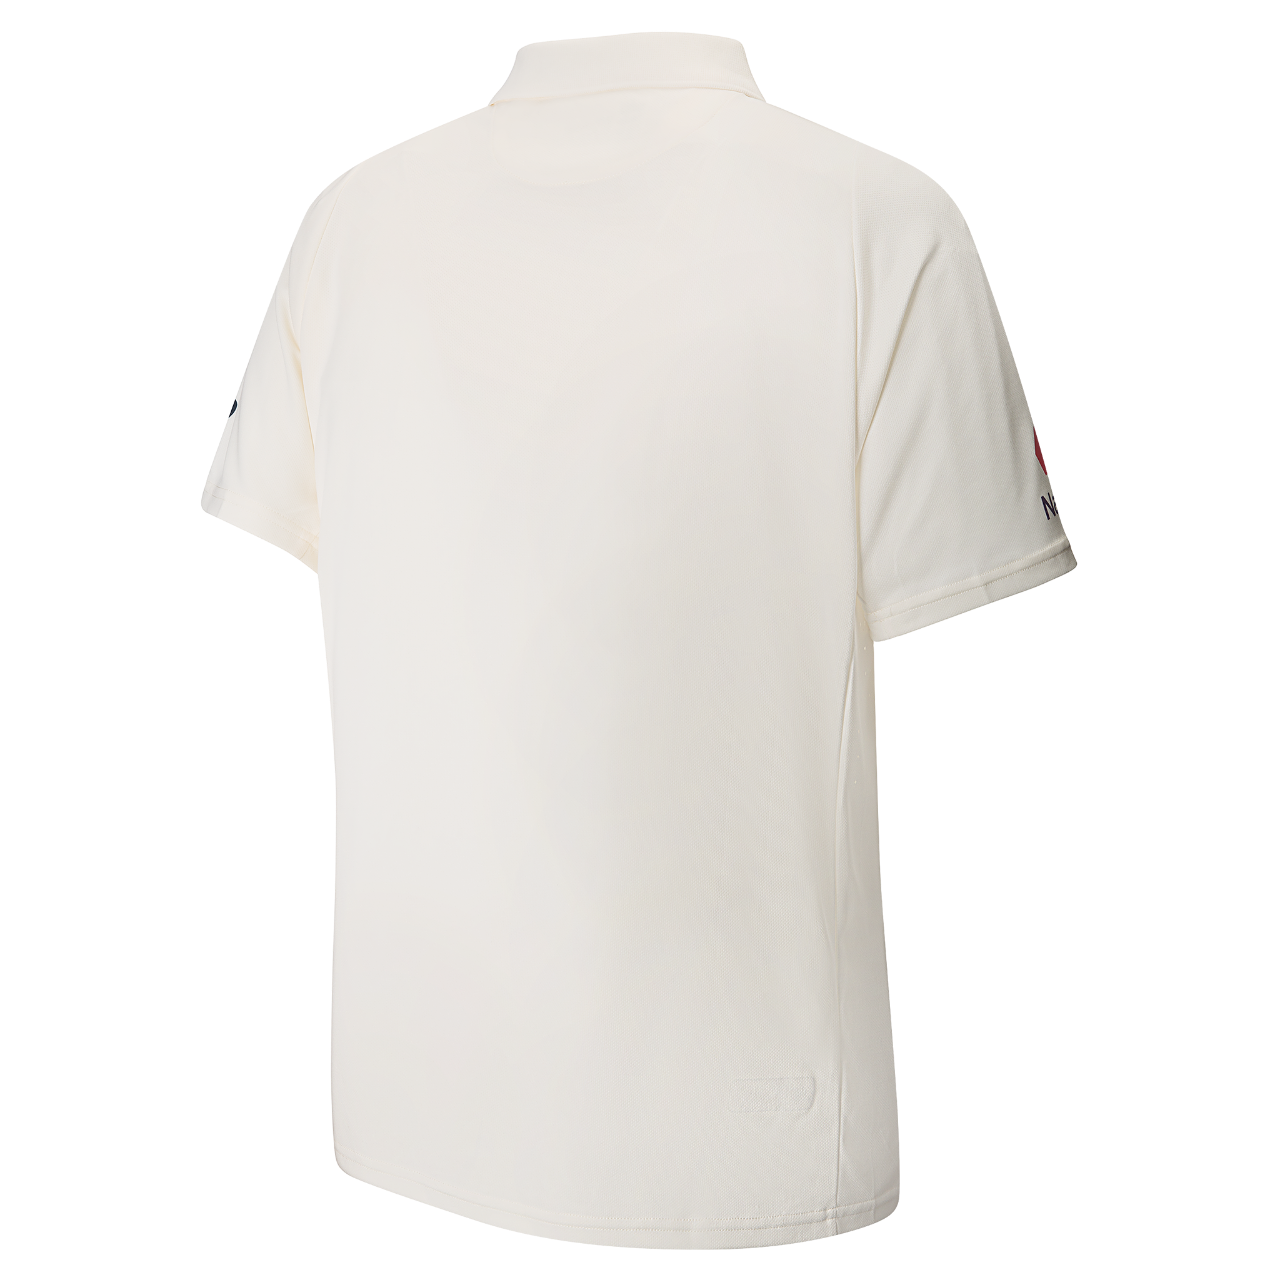 england test cricket jersey